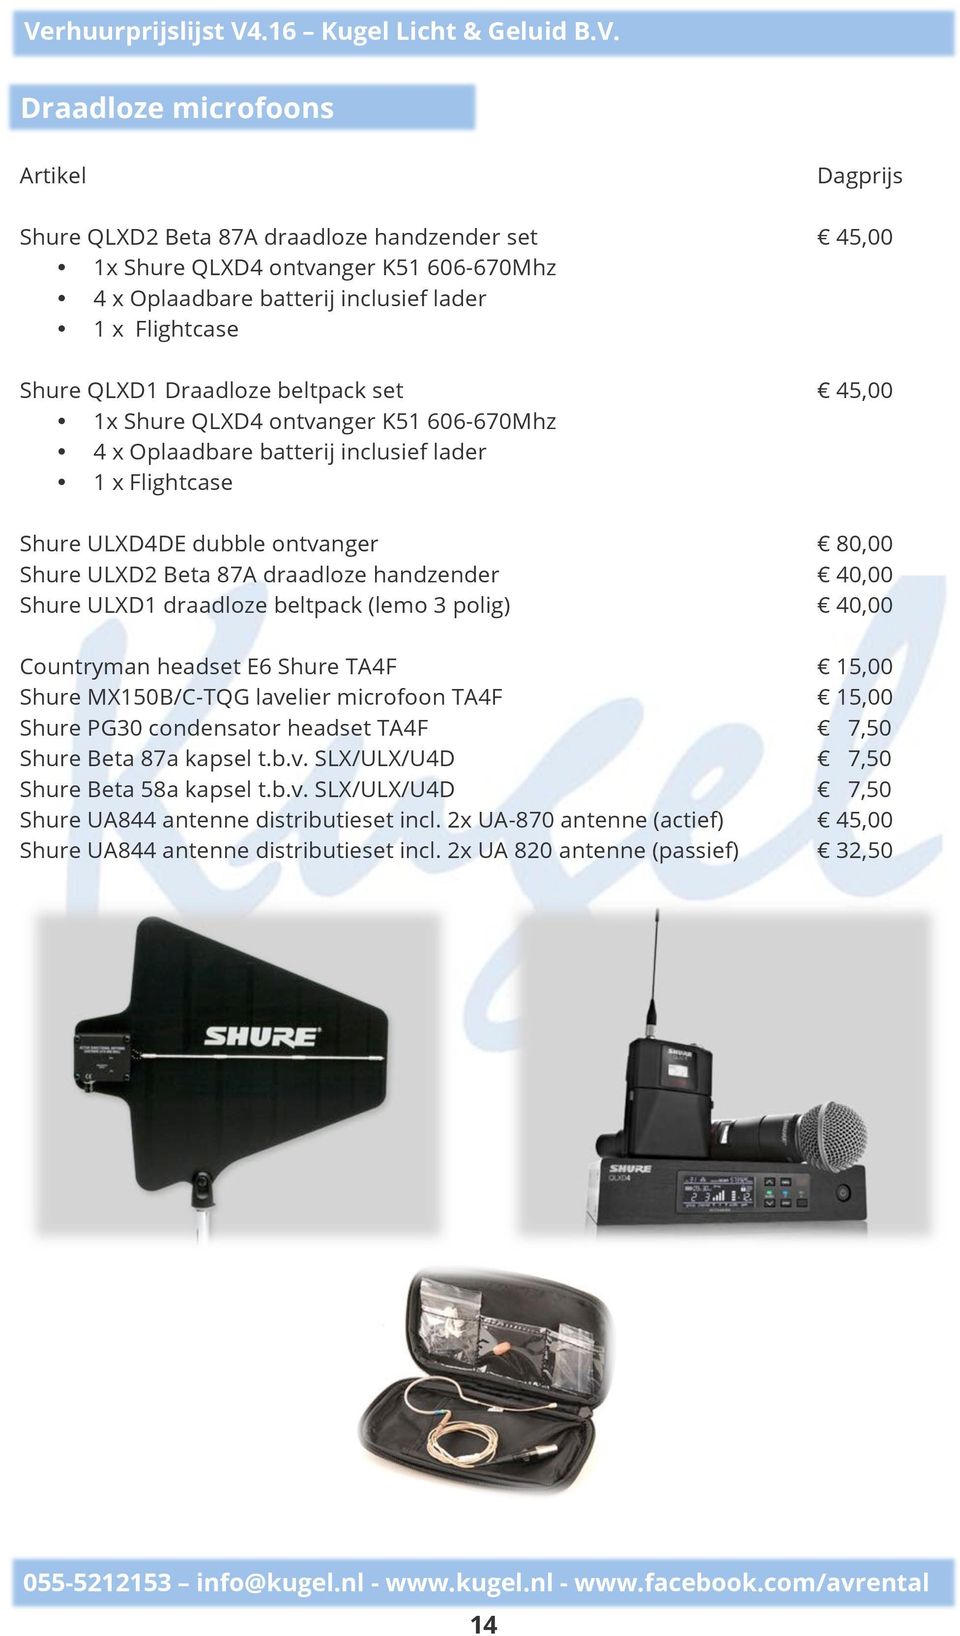 ULXD1 draadloze beltpack (lemo 3 polig) 40,00 Countryman headset E6 Shure TA4F 15,00 Shure MX150B/C-TQG lavelier microfoon TA4F 15,00 Shure PG30 condensator headset TA4F 7,50 Shure Beta 87a kapsel t.